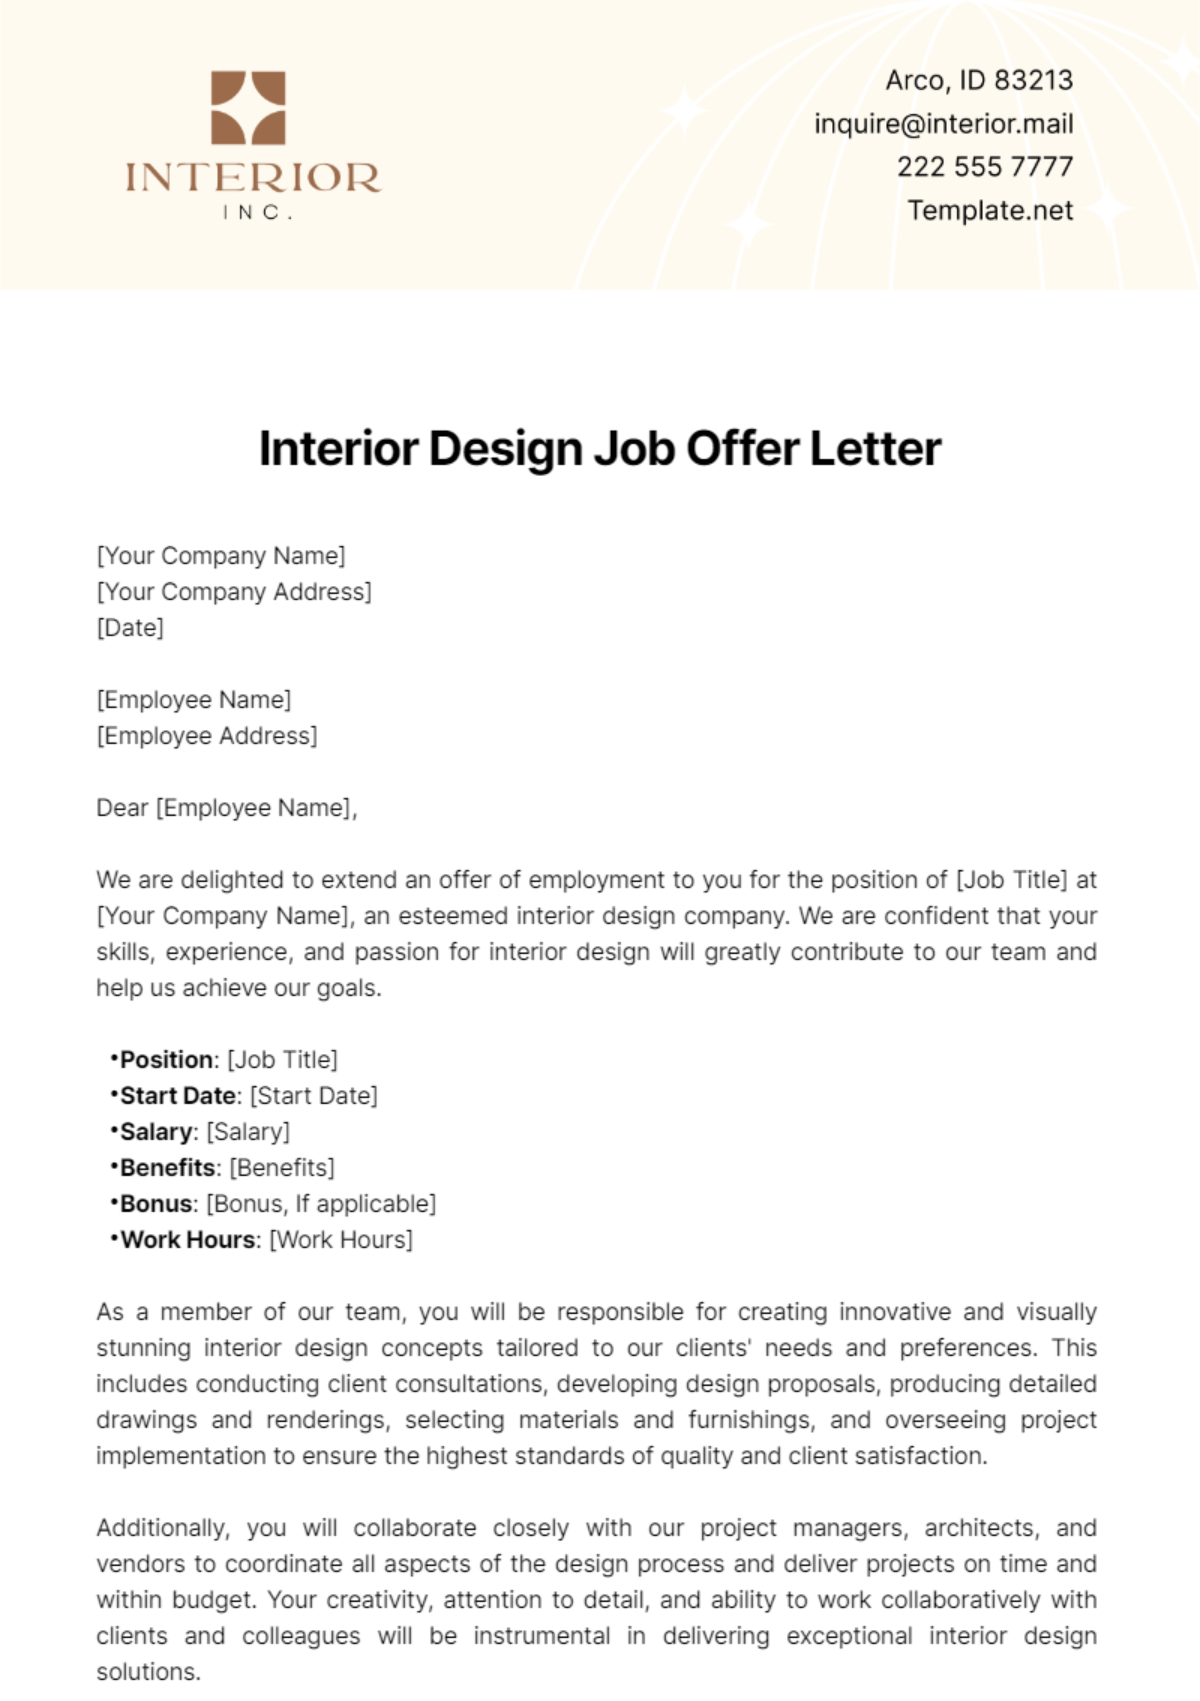 Interior Design Job Offer Letter Template